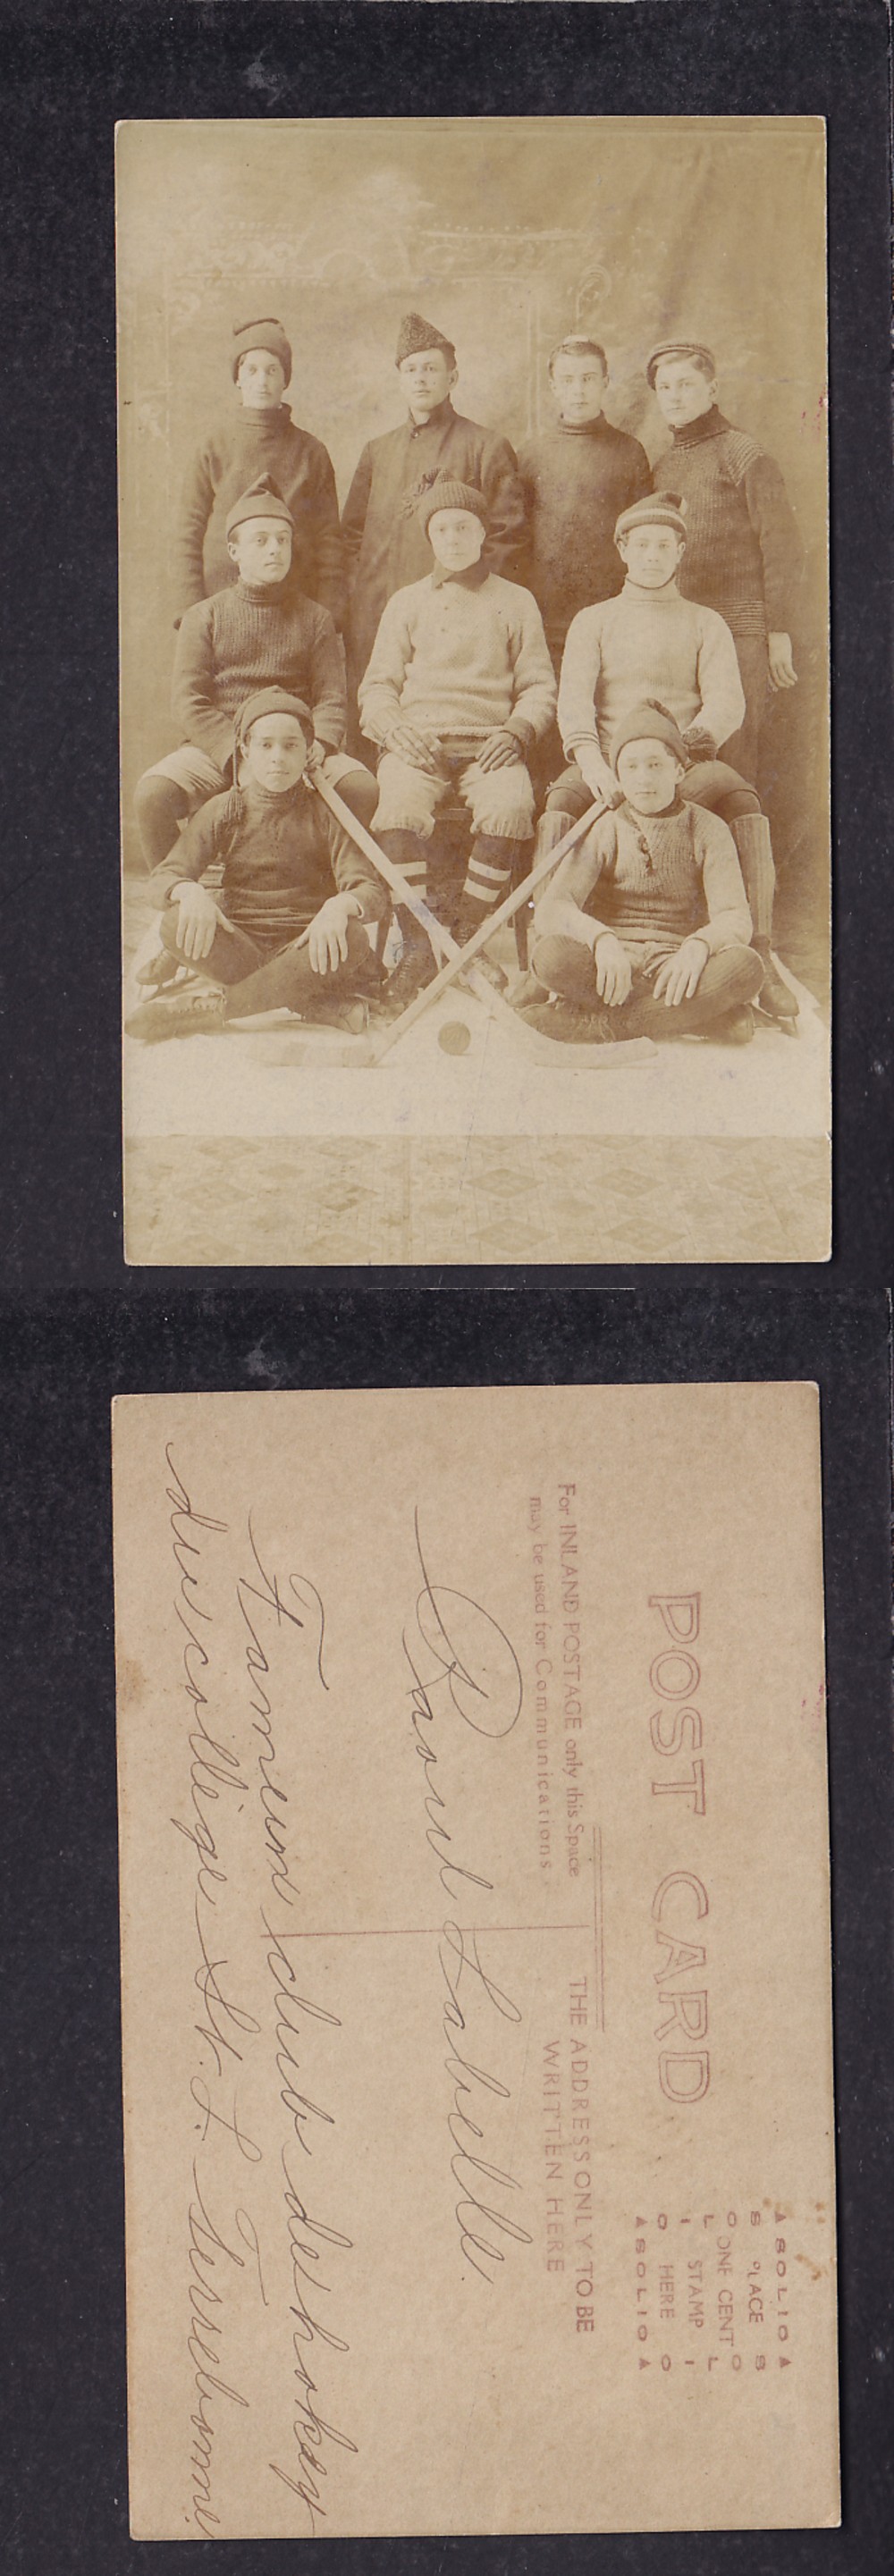 1900'S TERREBONNE HOCKEY TEAM POST CARD photo